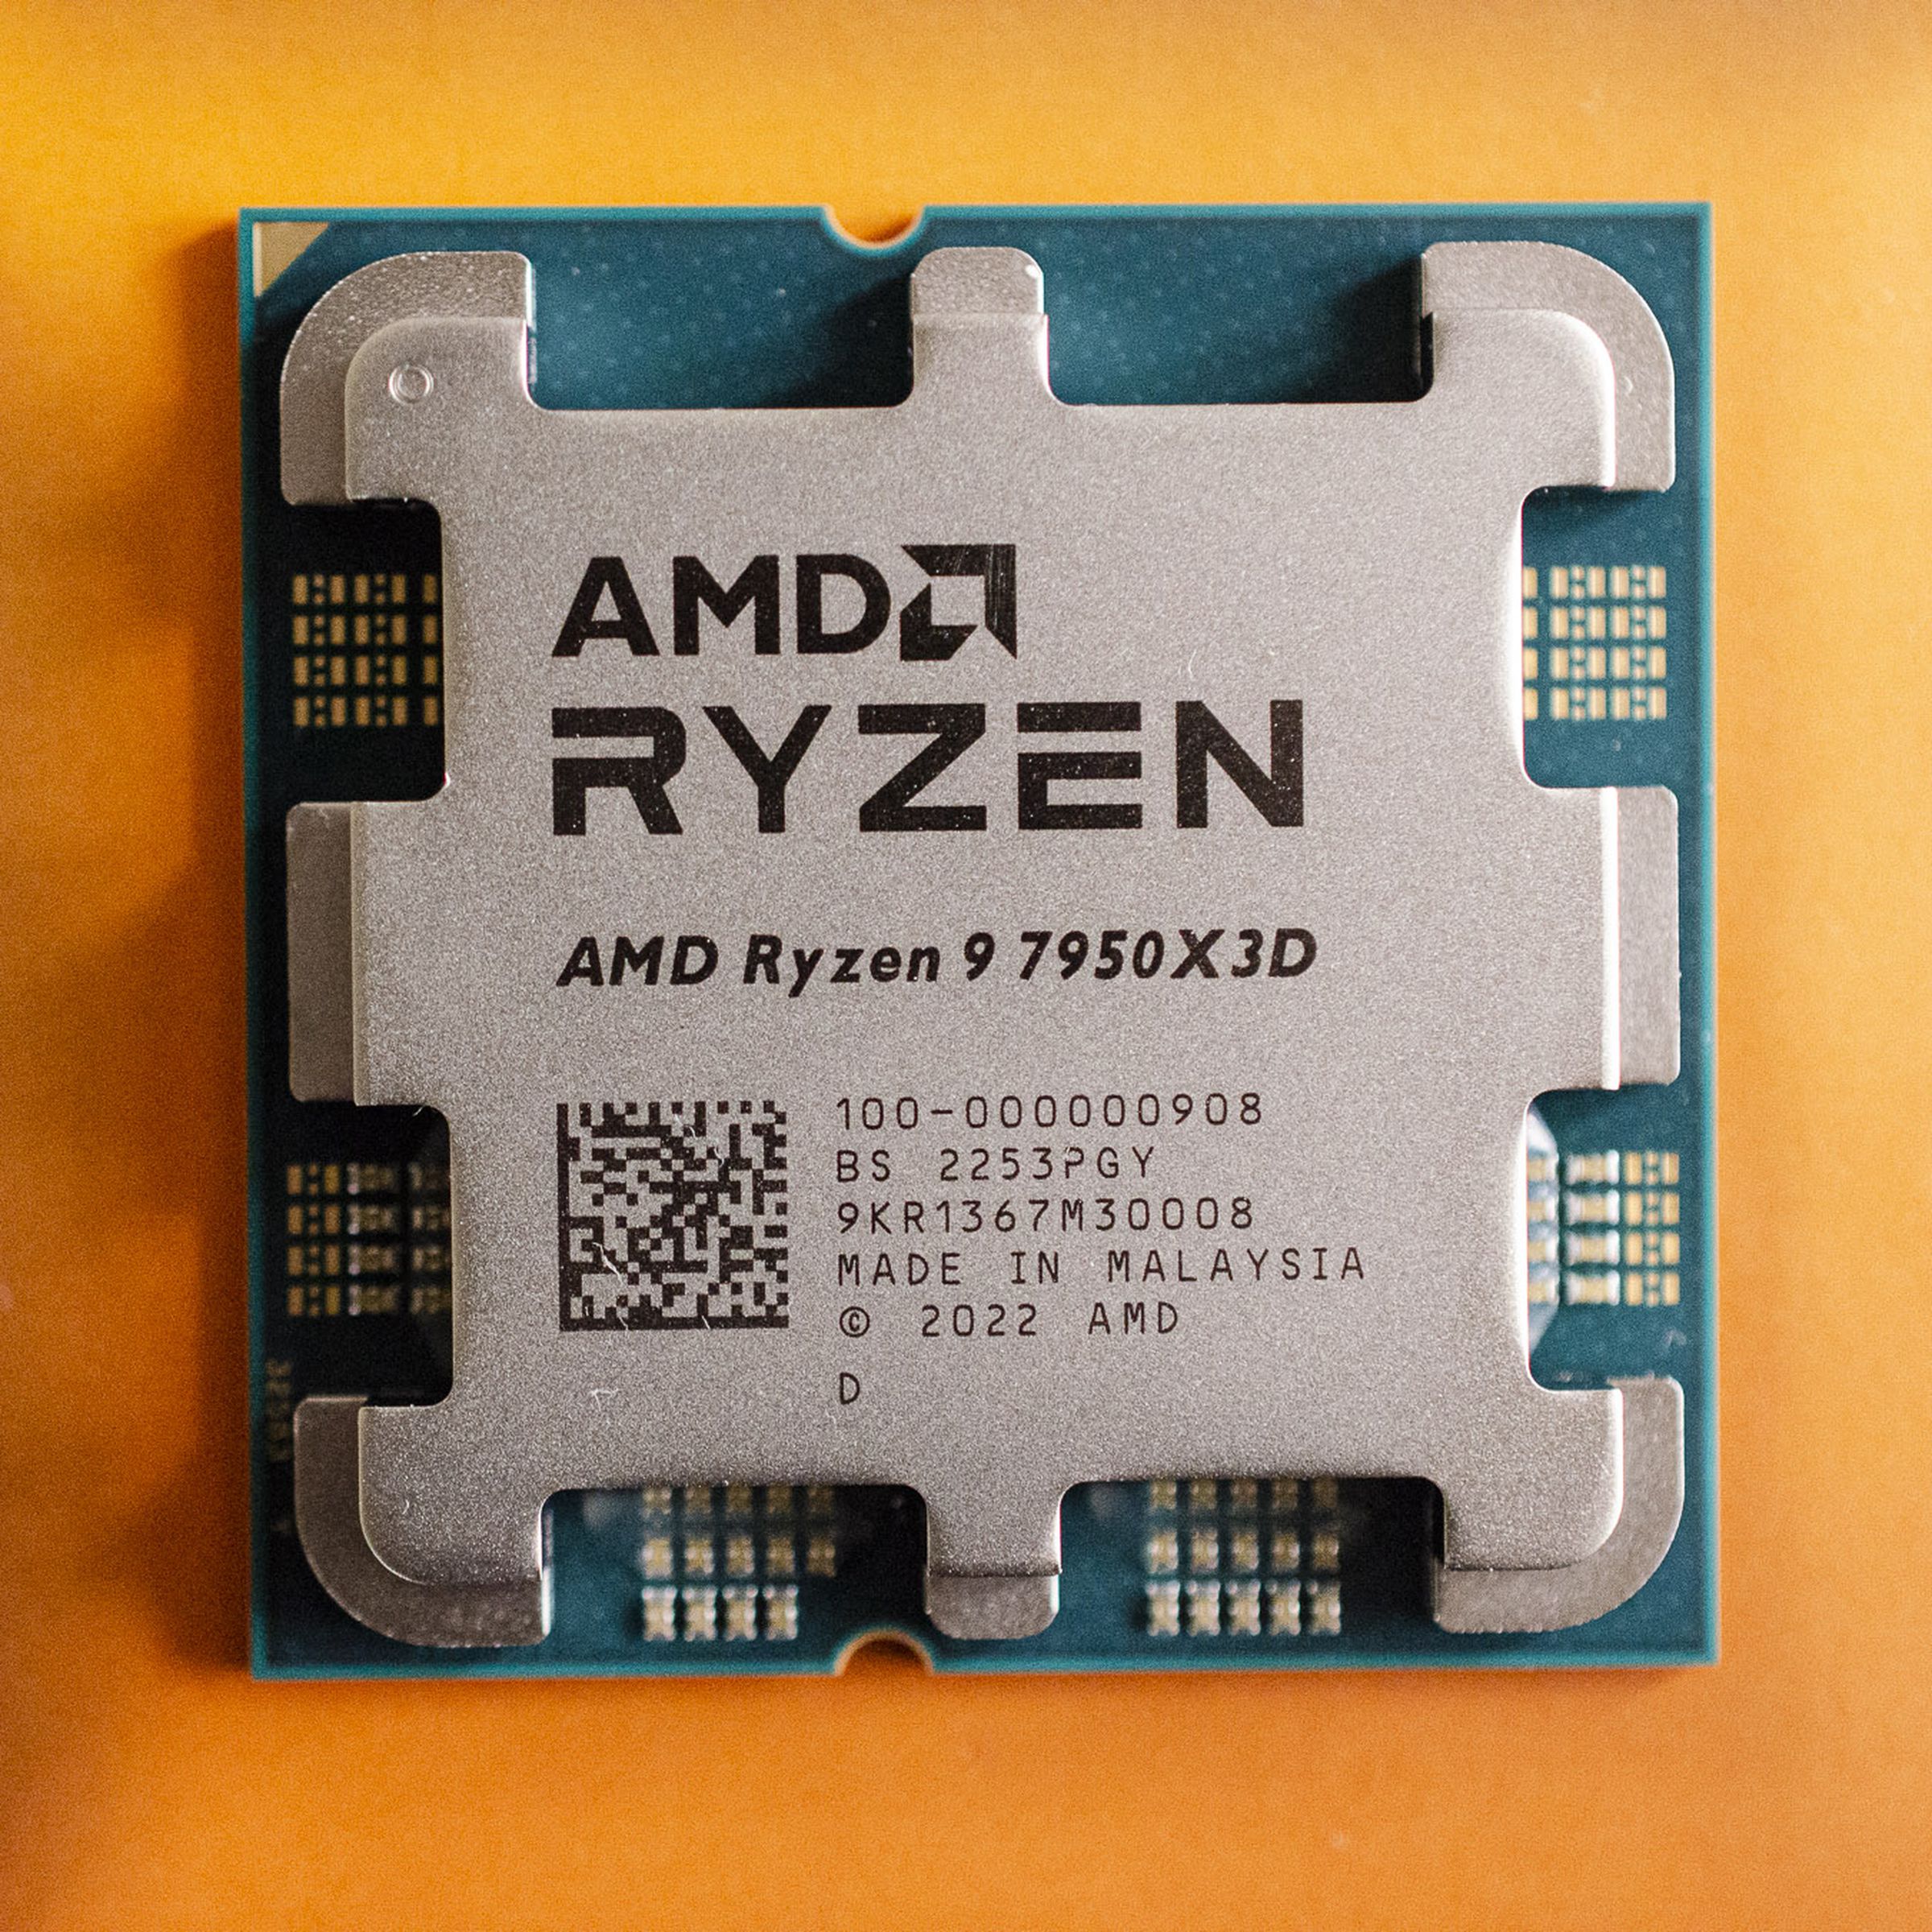 A close up photo of AMD’s new Ryzen 9 7950X3D processor on top of its orange box